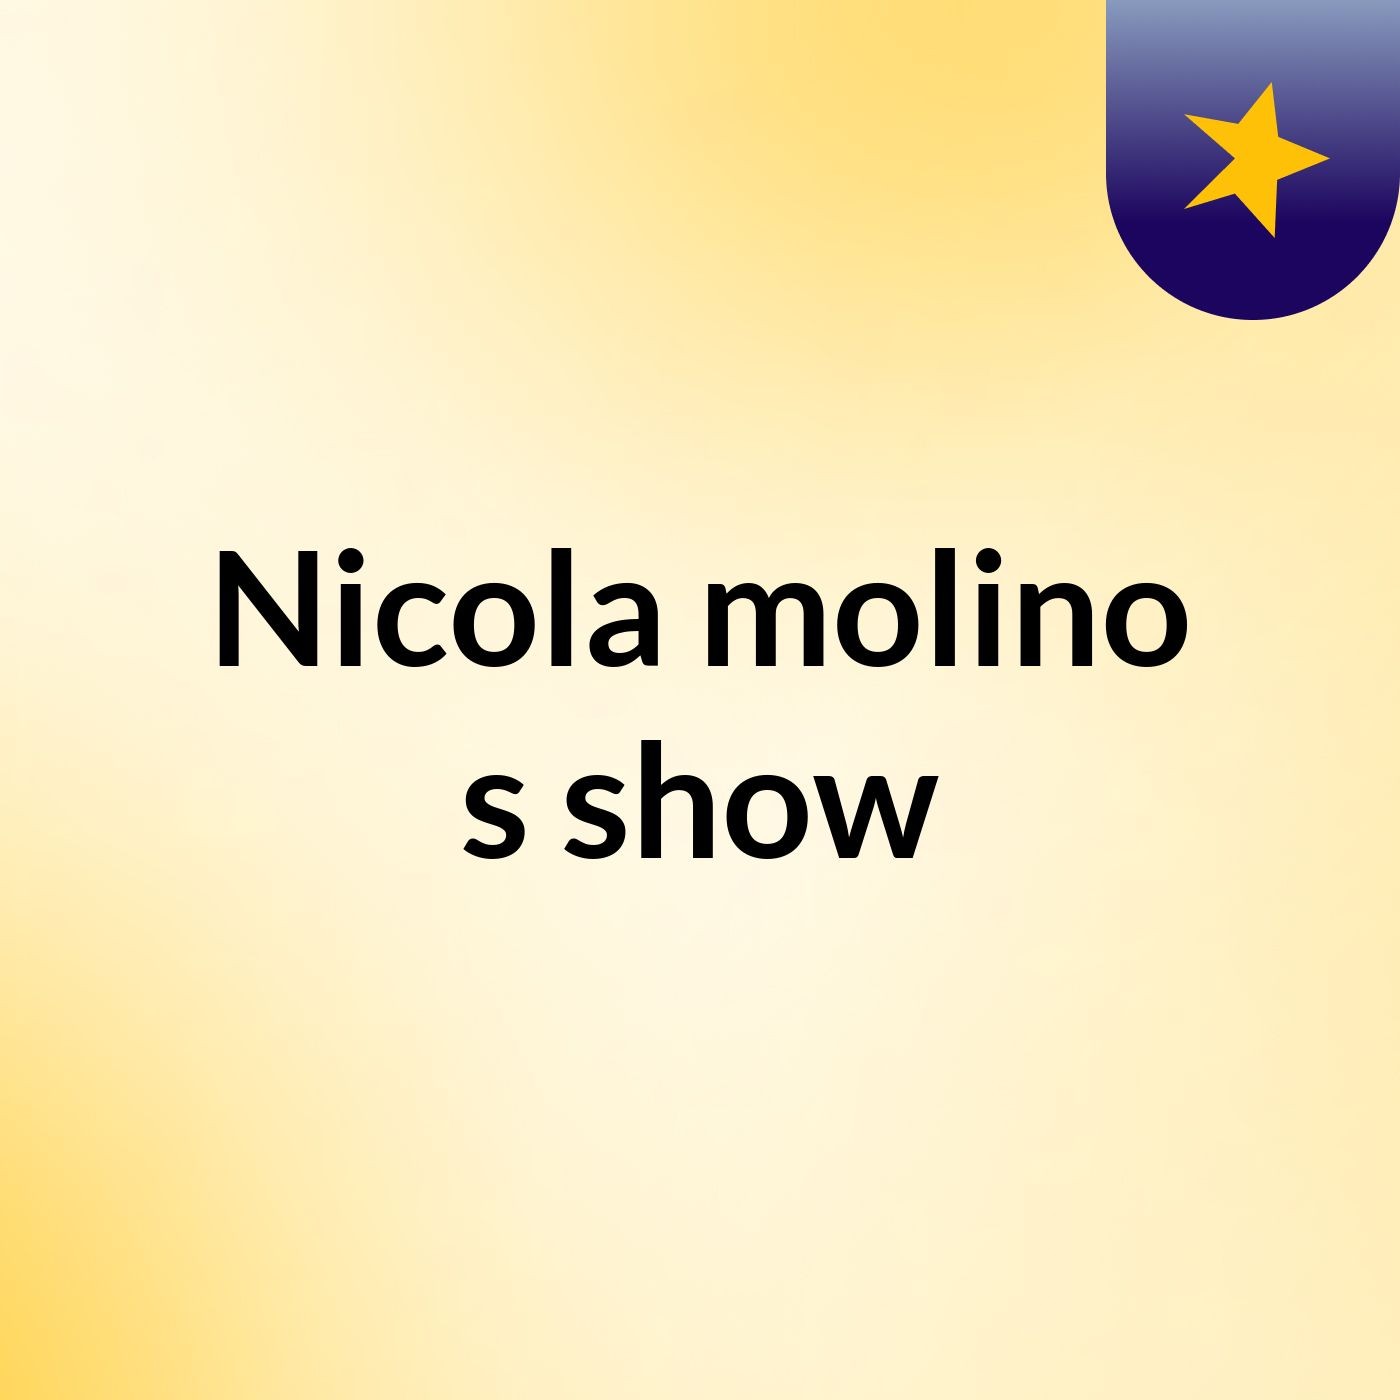 Nicola molino's show